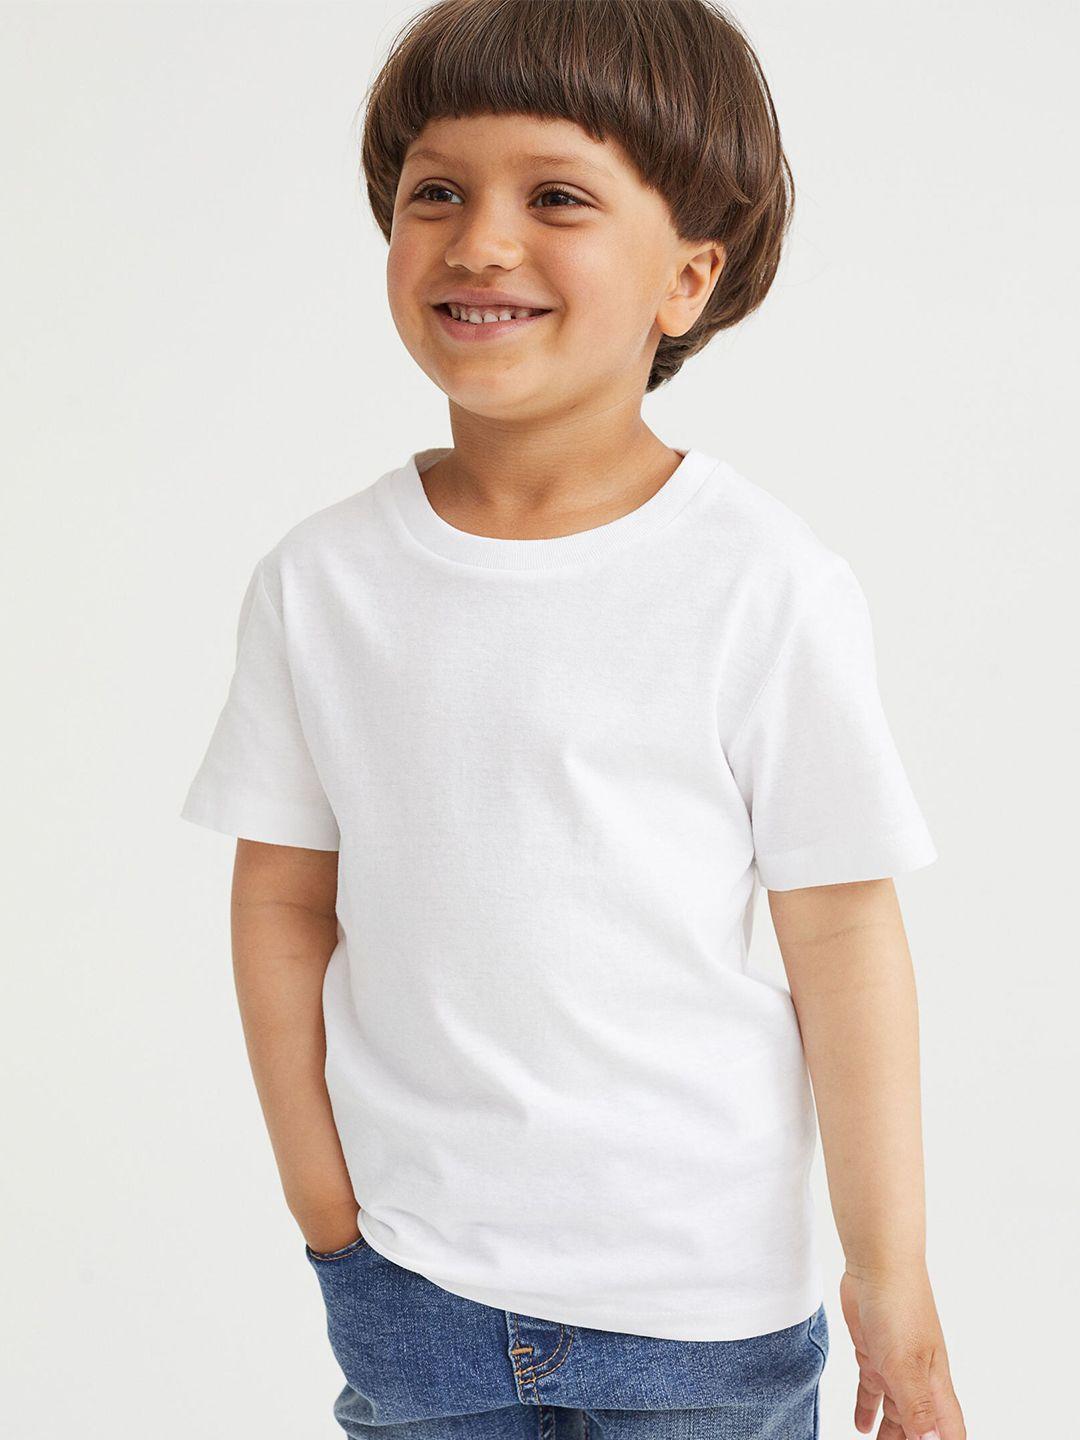 h&m boys white pure cotton slim fit t-shirt